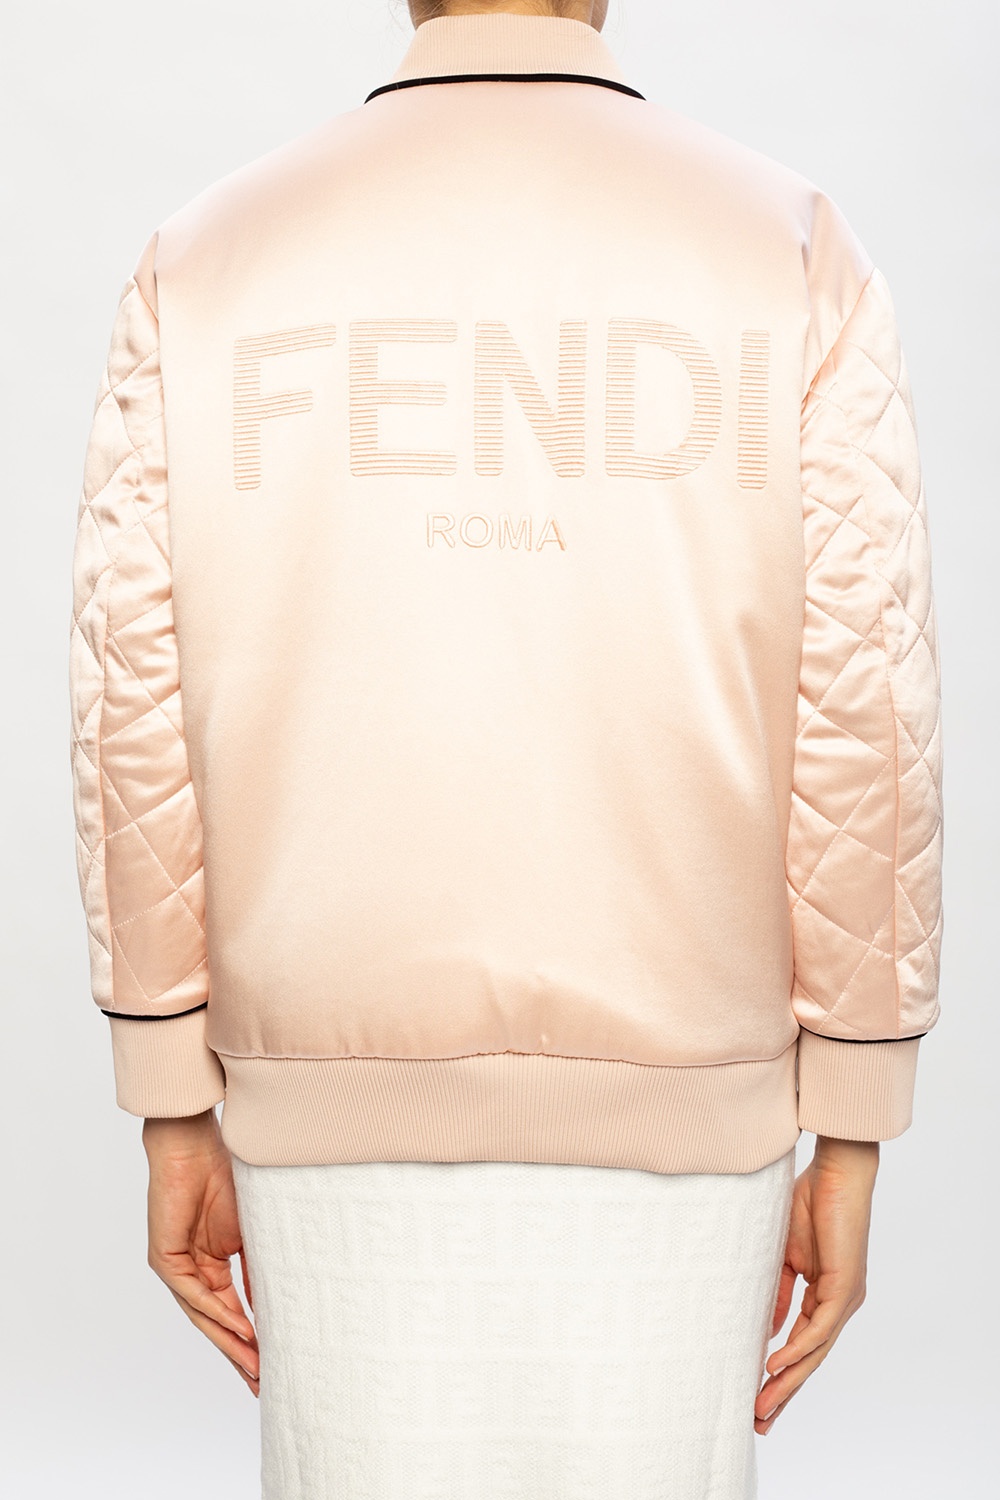 Fendi would love one of those Fendi dresses in the Zucca print